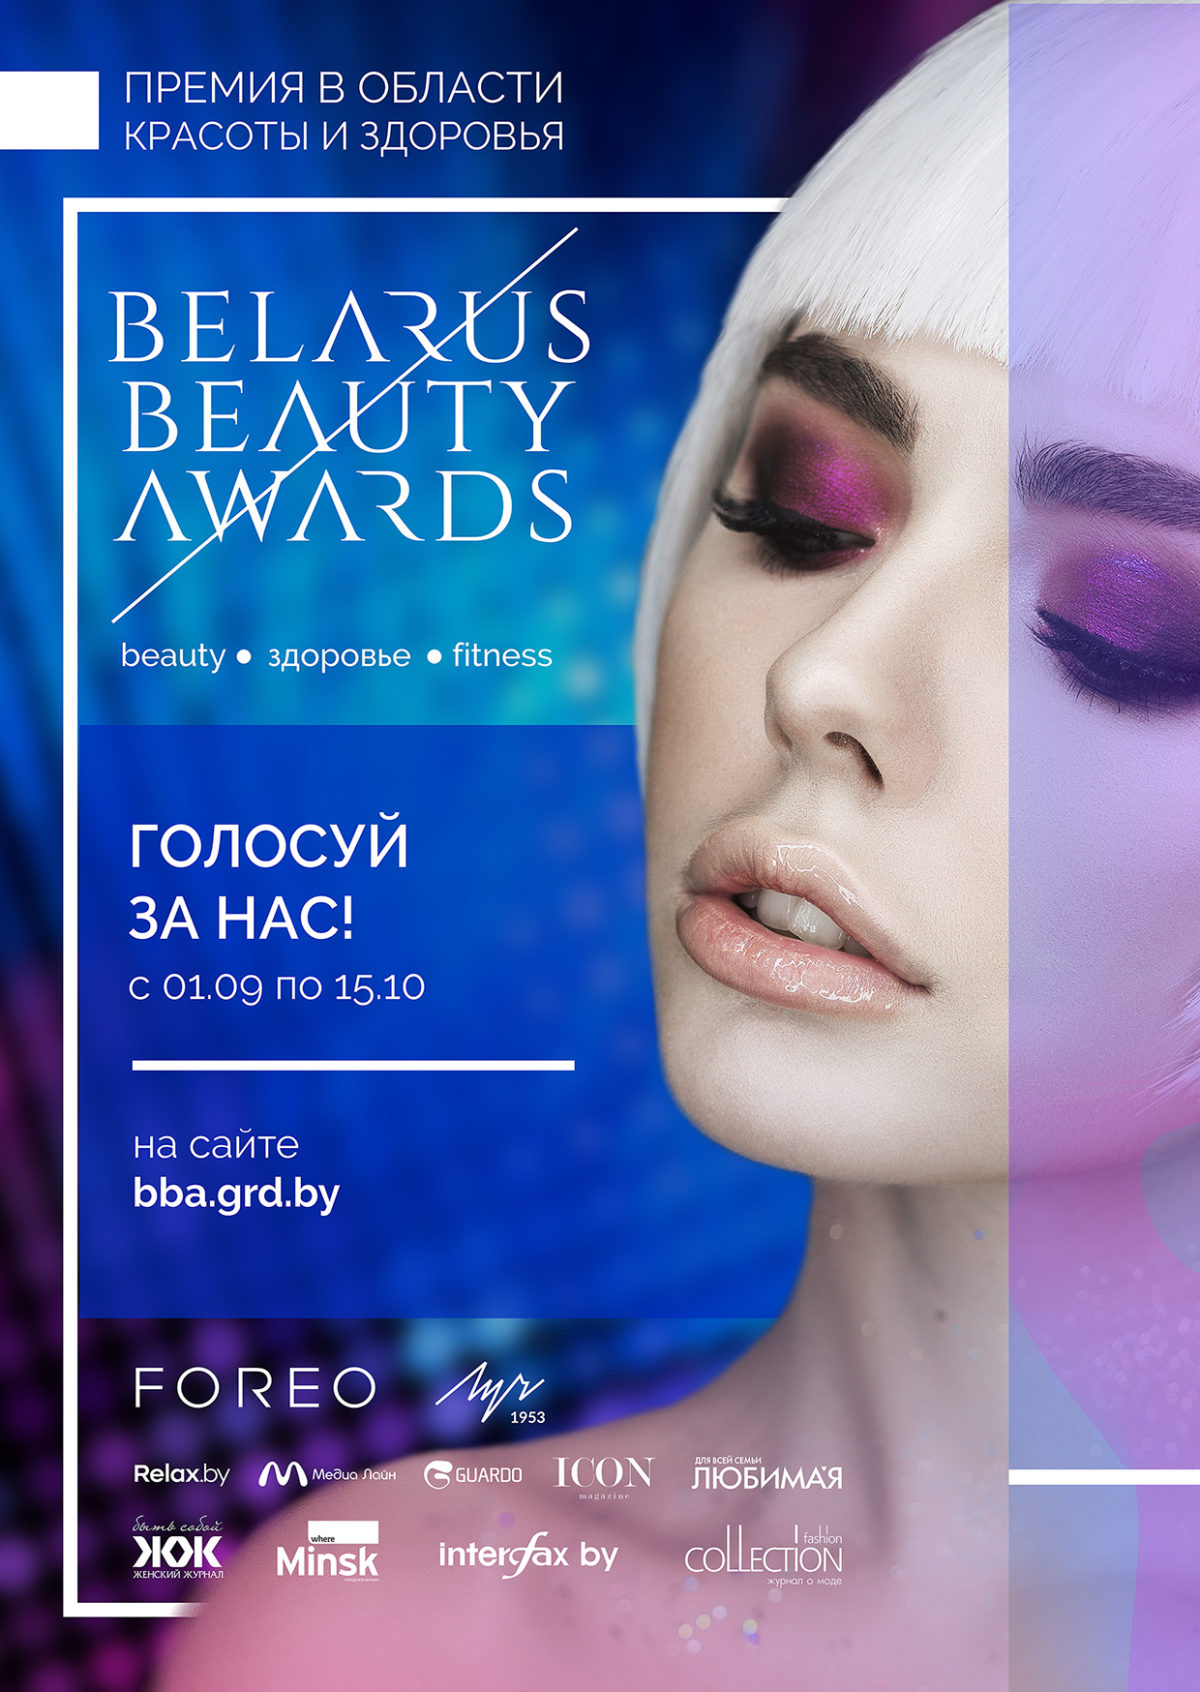 Голосуй за нас! Номинация в премии Belarus Beauty Awards